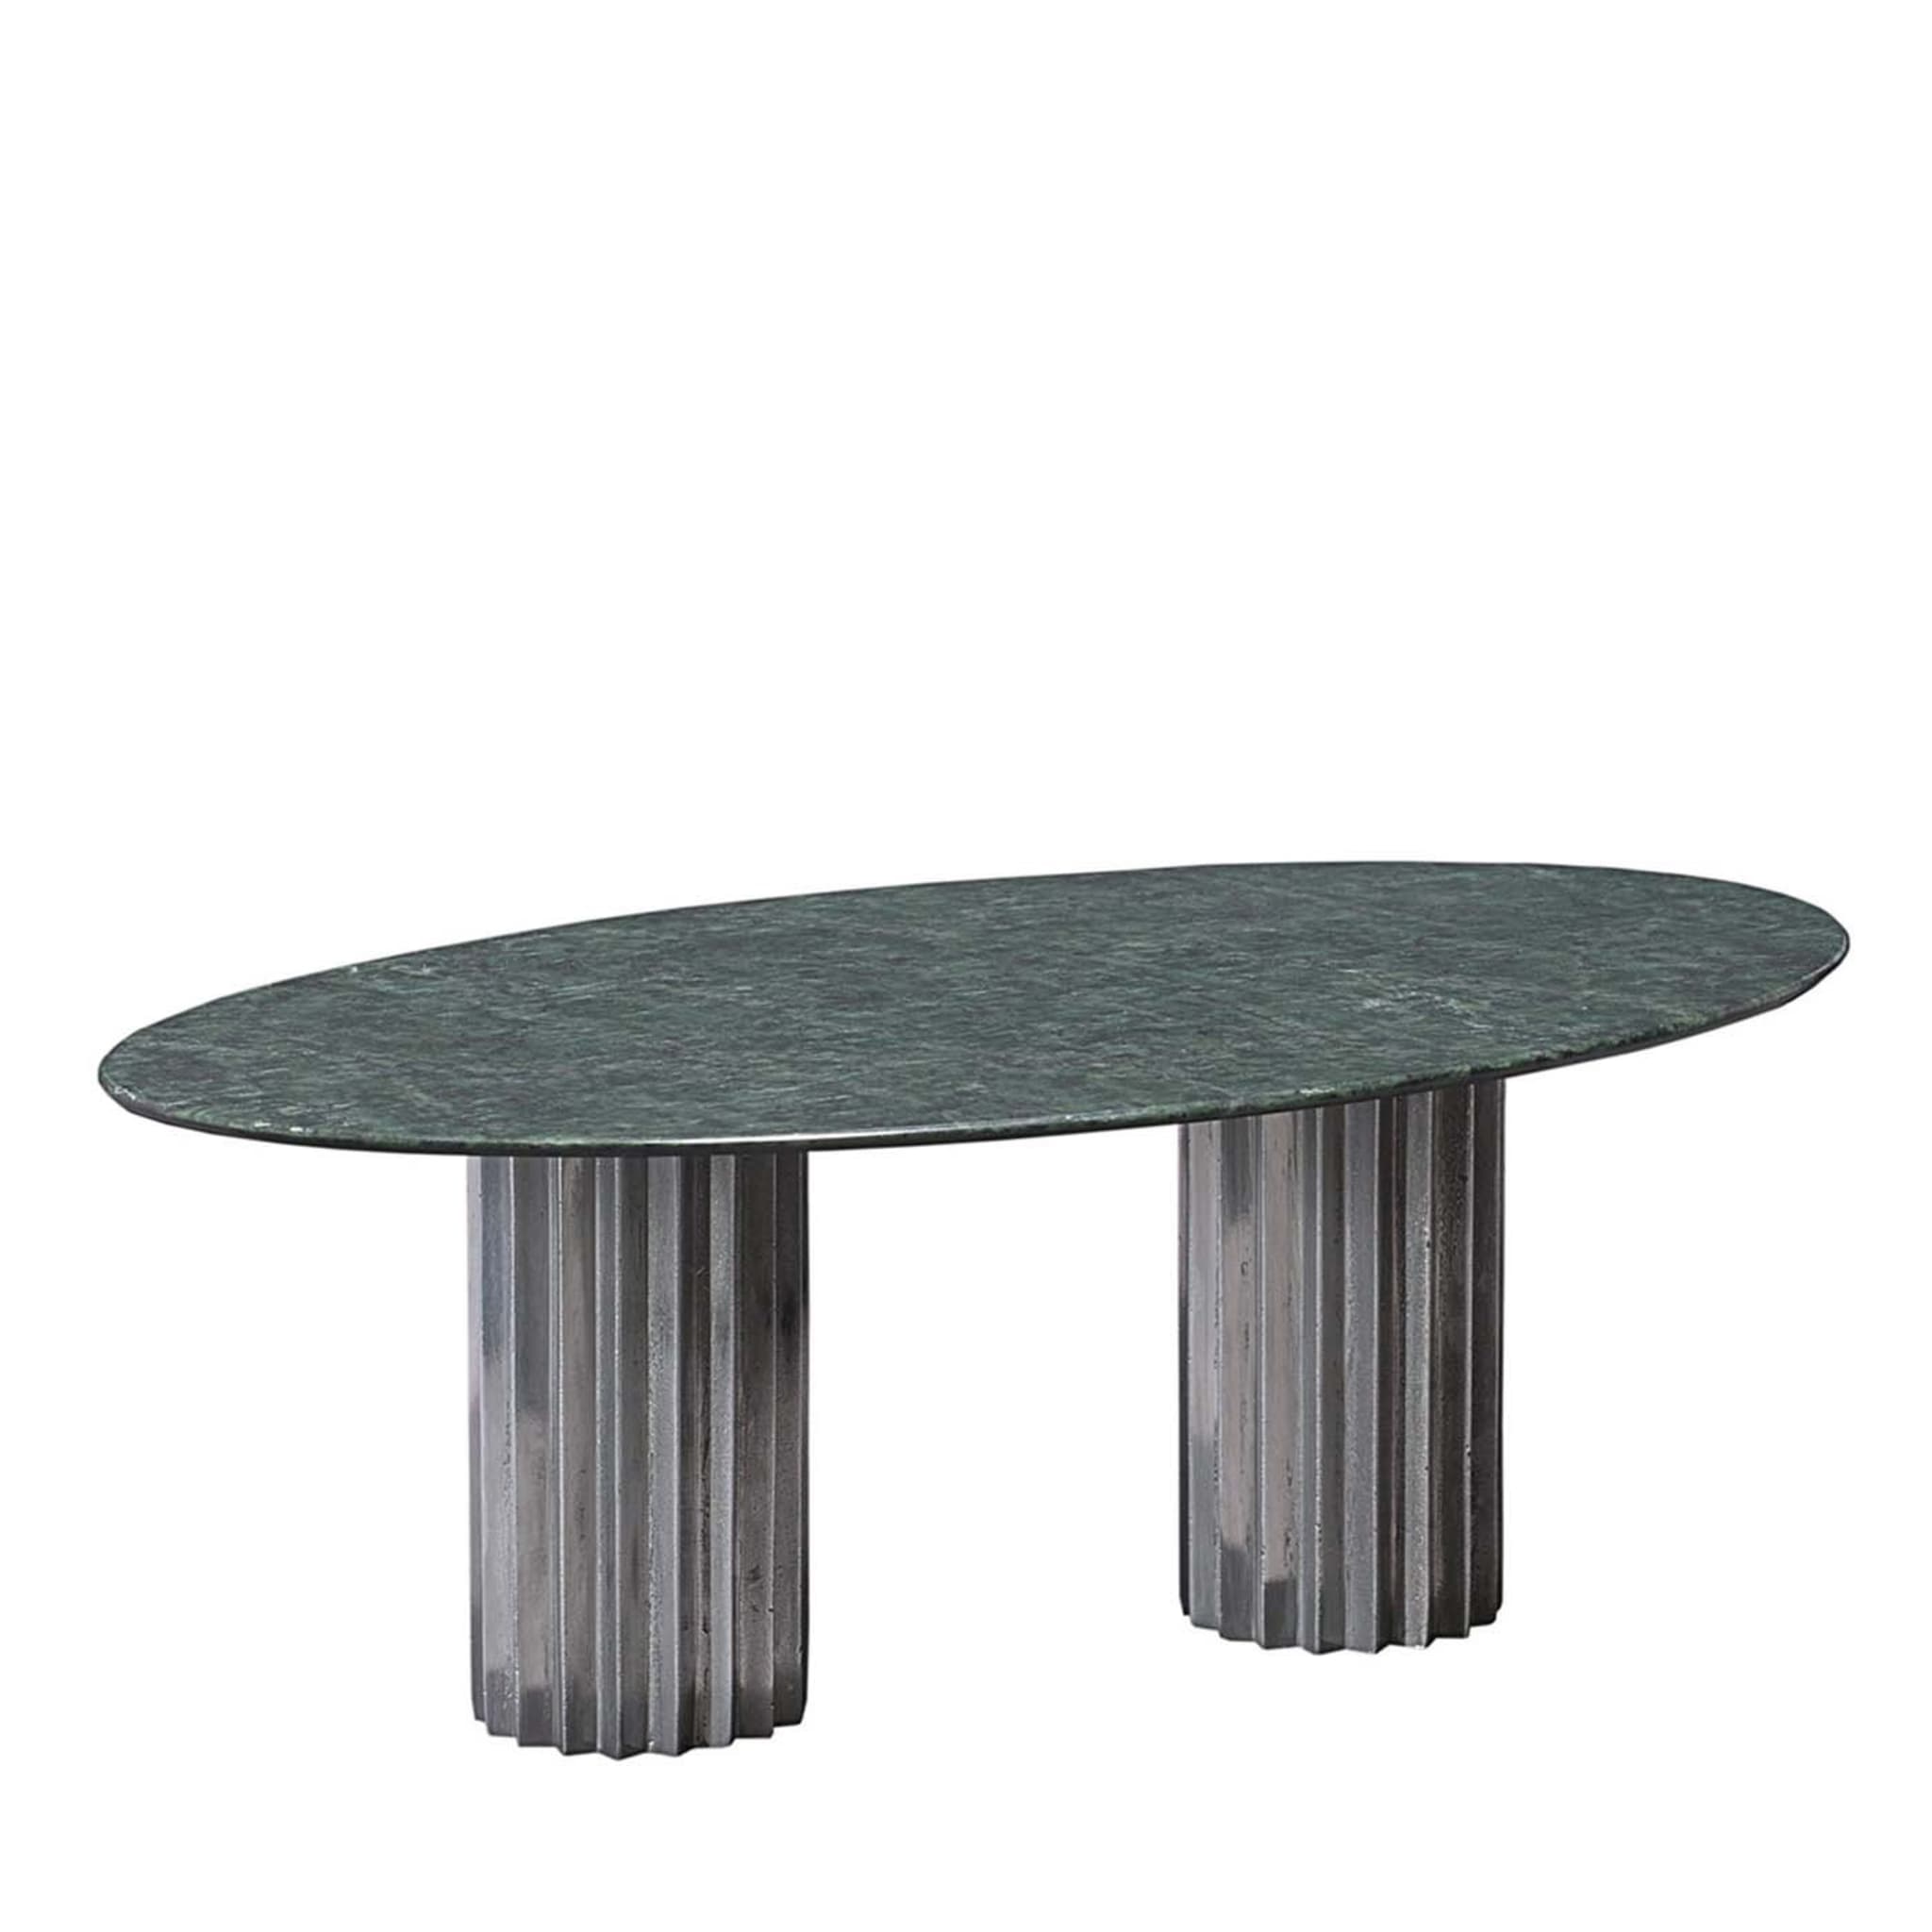 Ovaler Esstisch Doris aus grünem Marmor und Aluminium - Hauptansicht